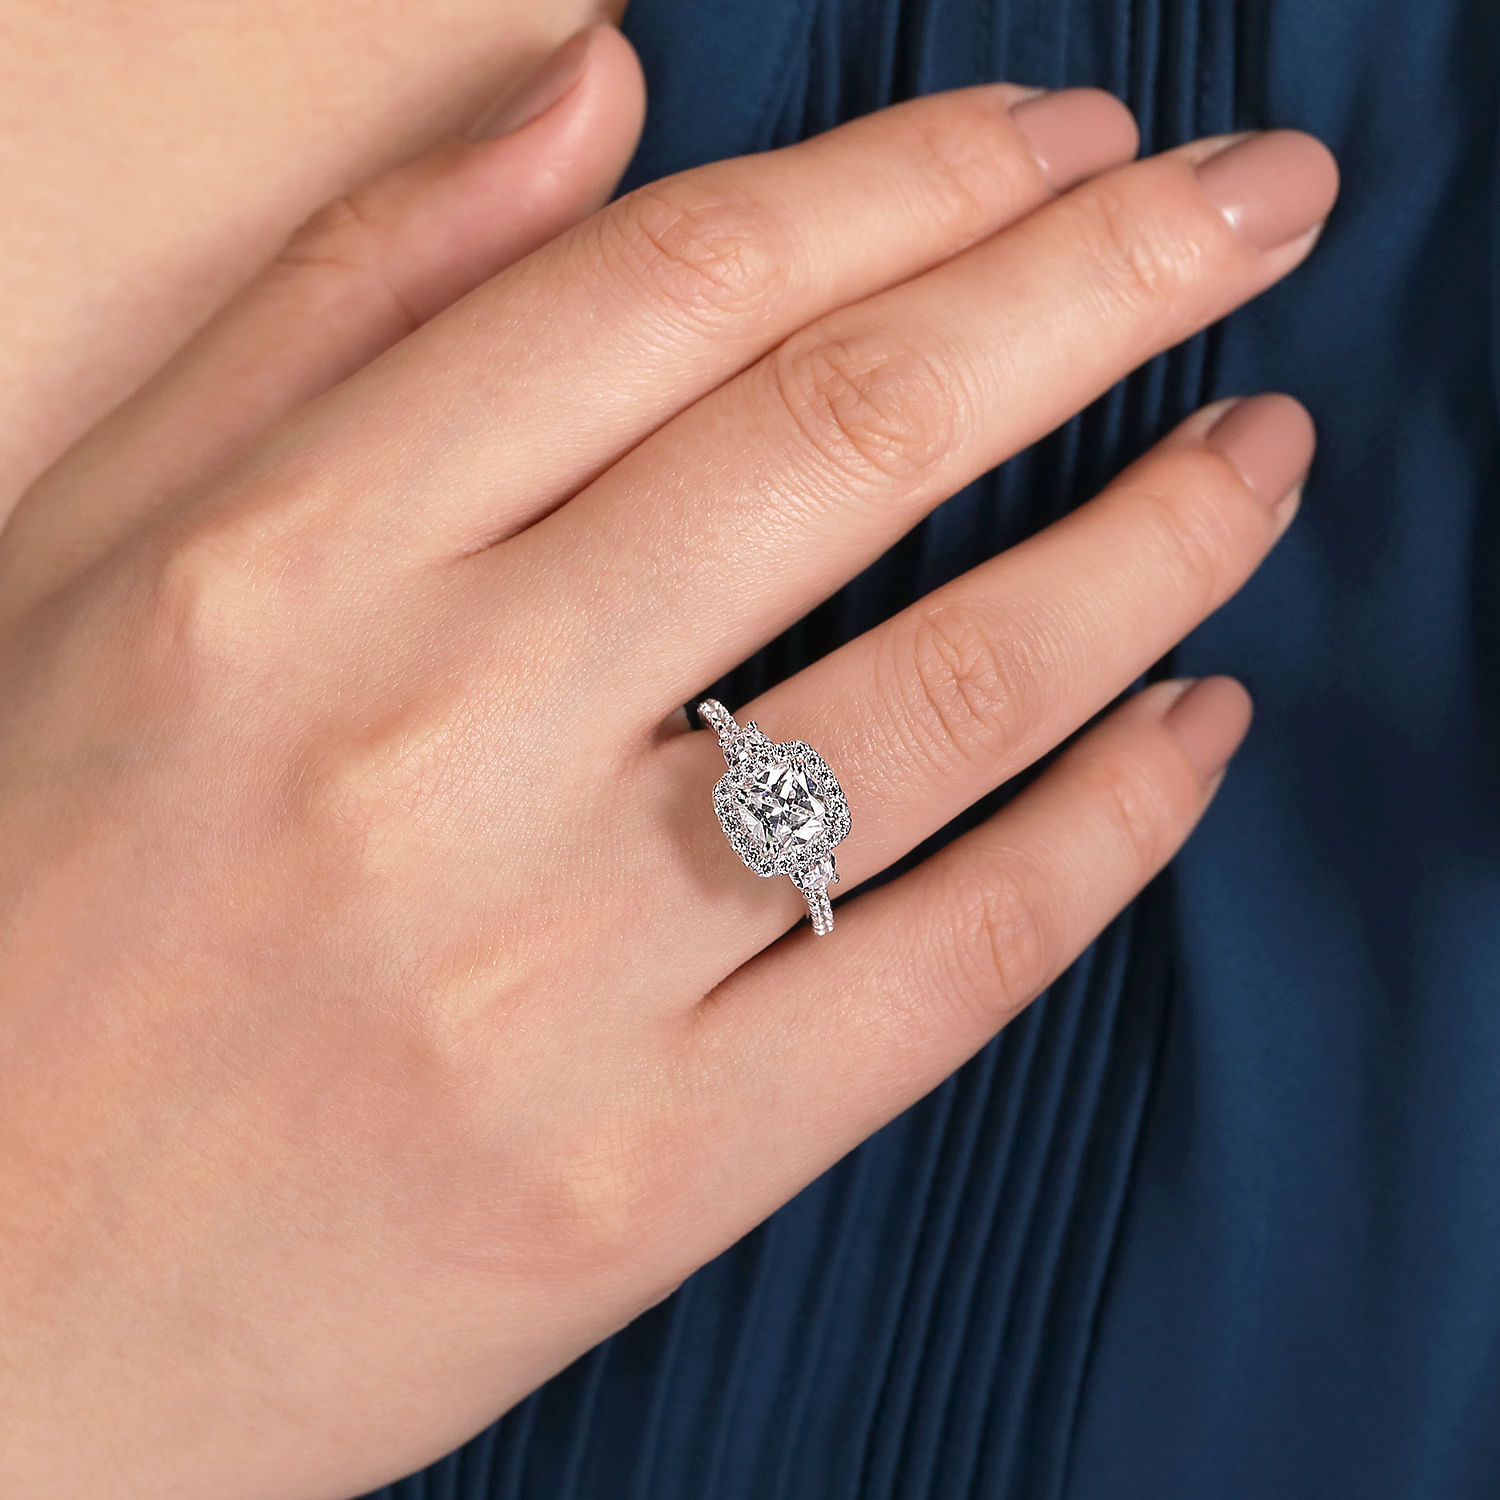 Vintage Inspired 14K White Gold Cushion Three Stone Halo Diamond Engagement Ring